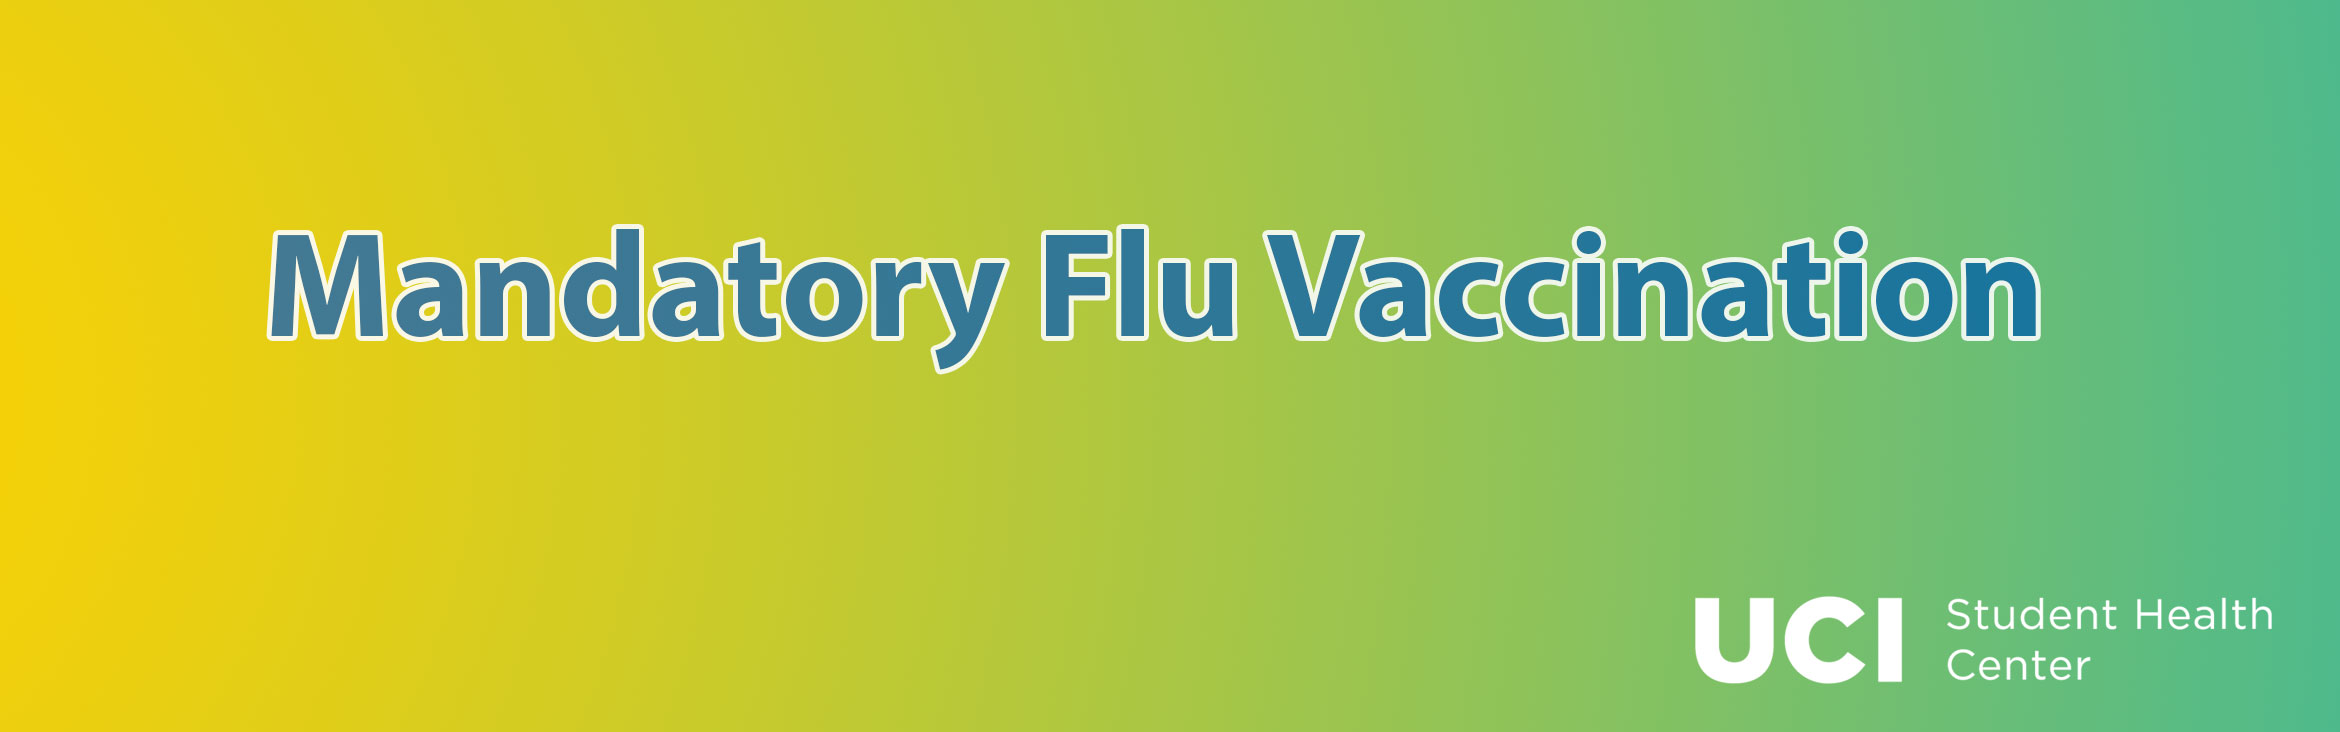 Mandatory Flu Vaccination